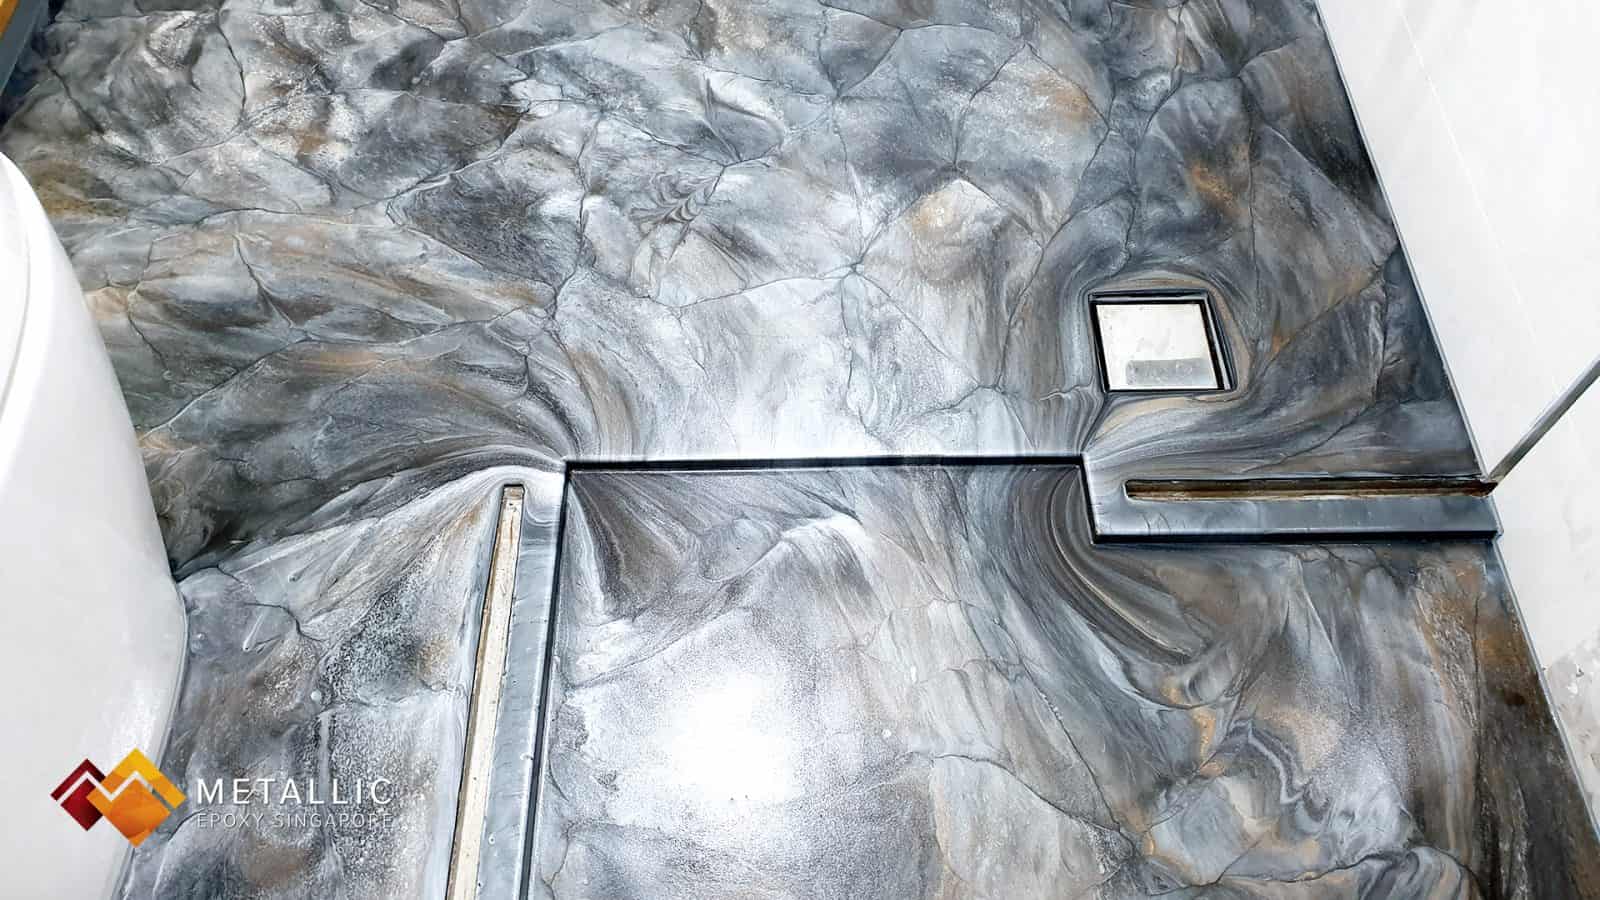 Metallic Epoxy Bathroom Flooring